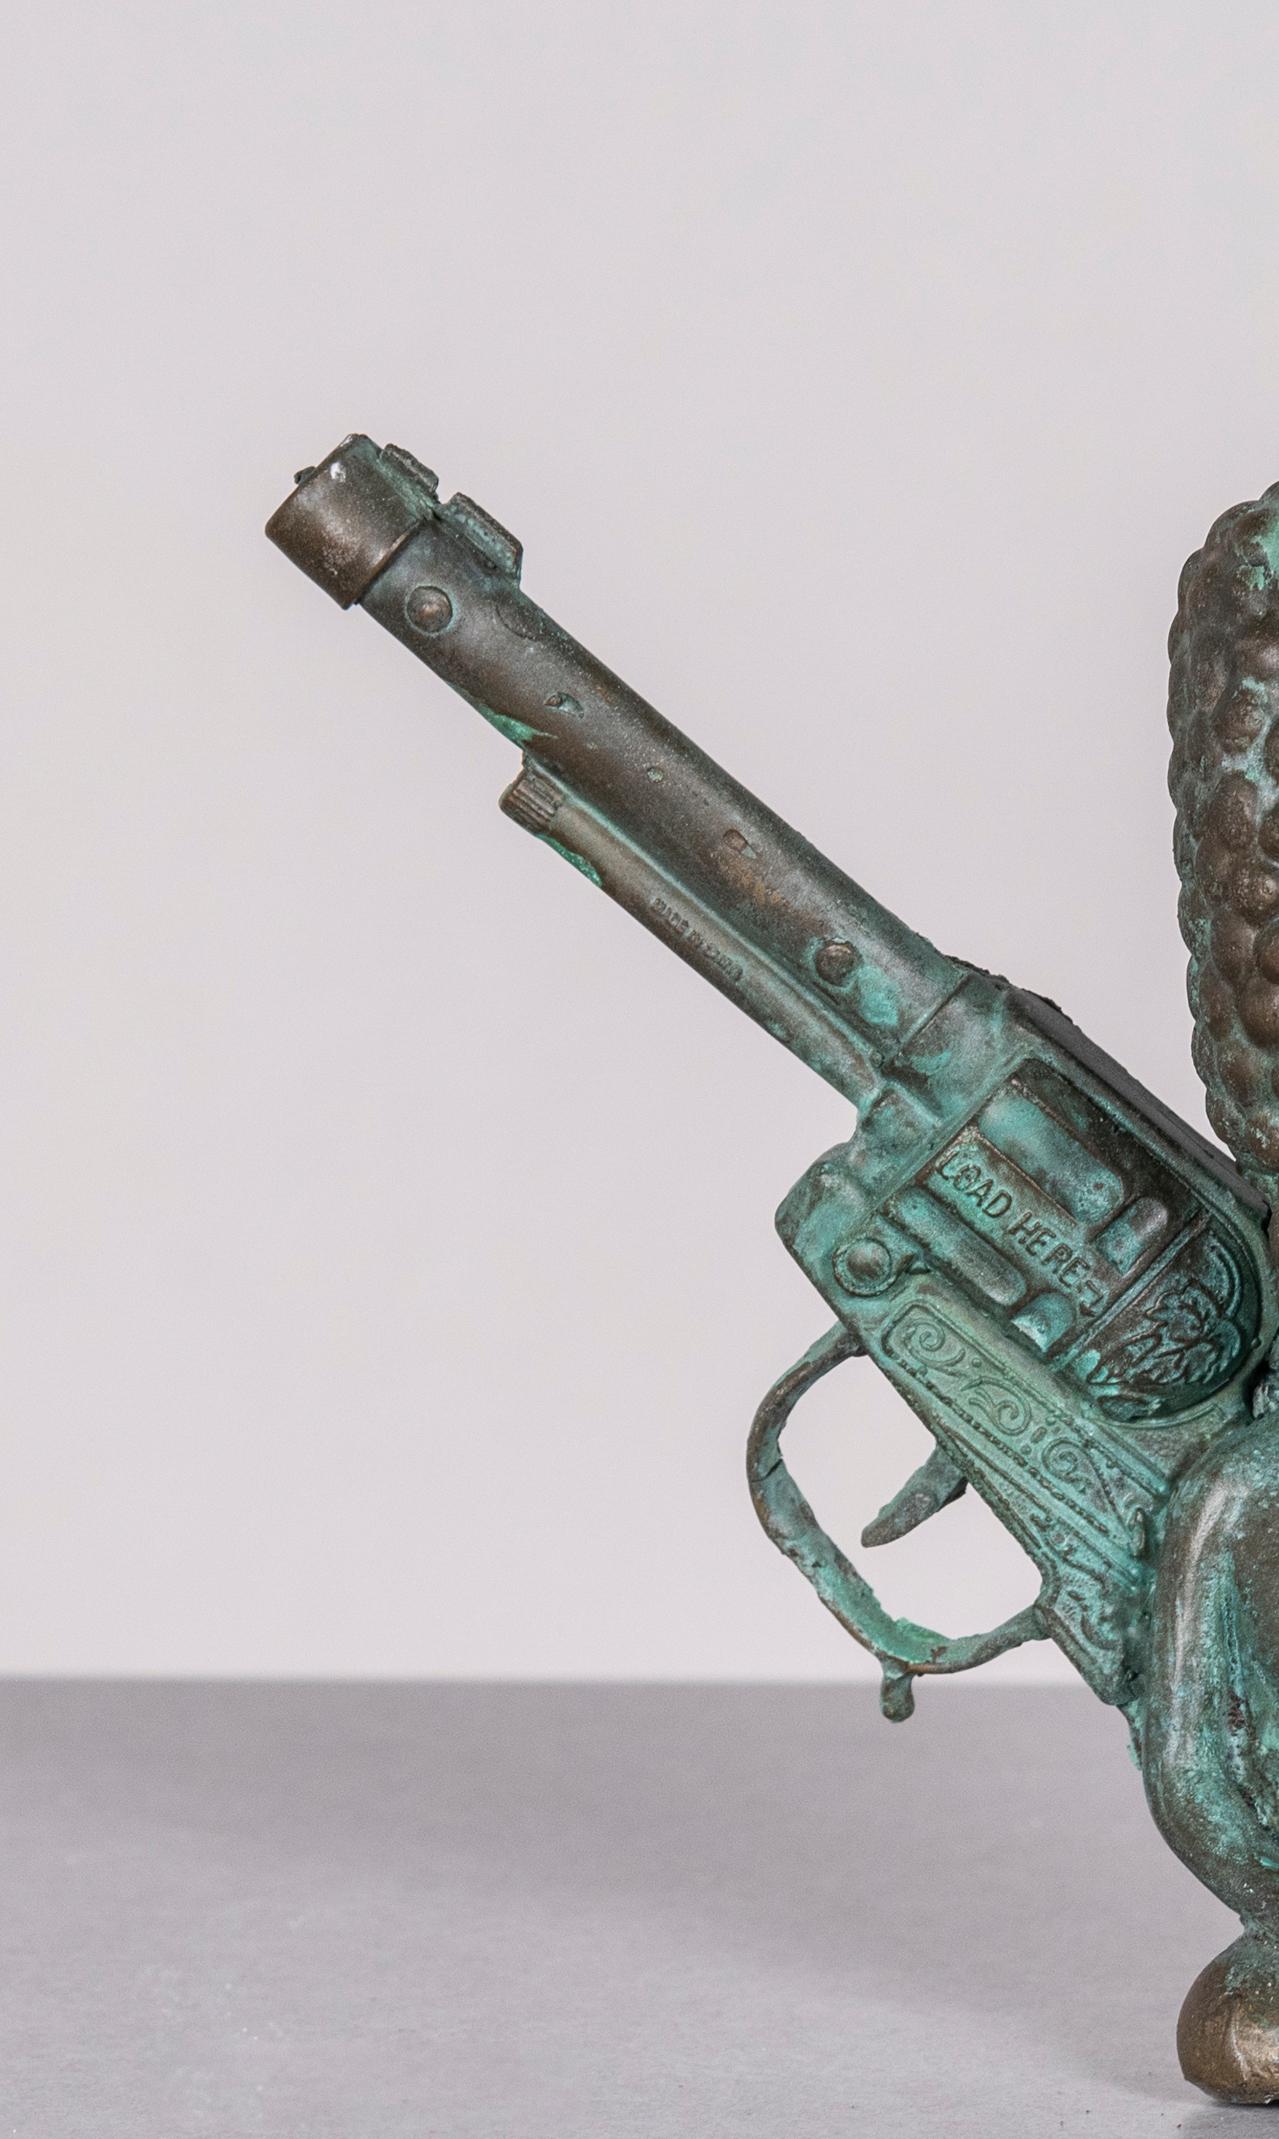 Culture populaire, sculpture en bronze : « Athena » - Or Figurative Sculpture par Joshua Goode